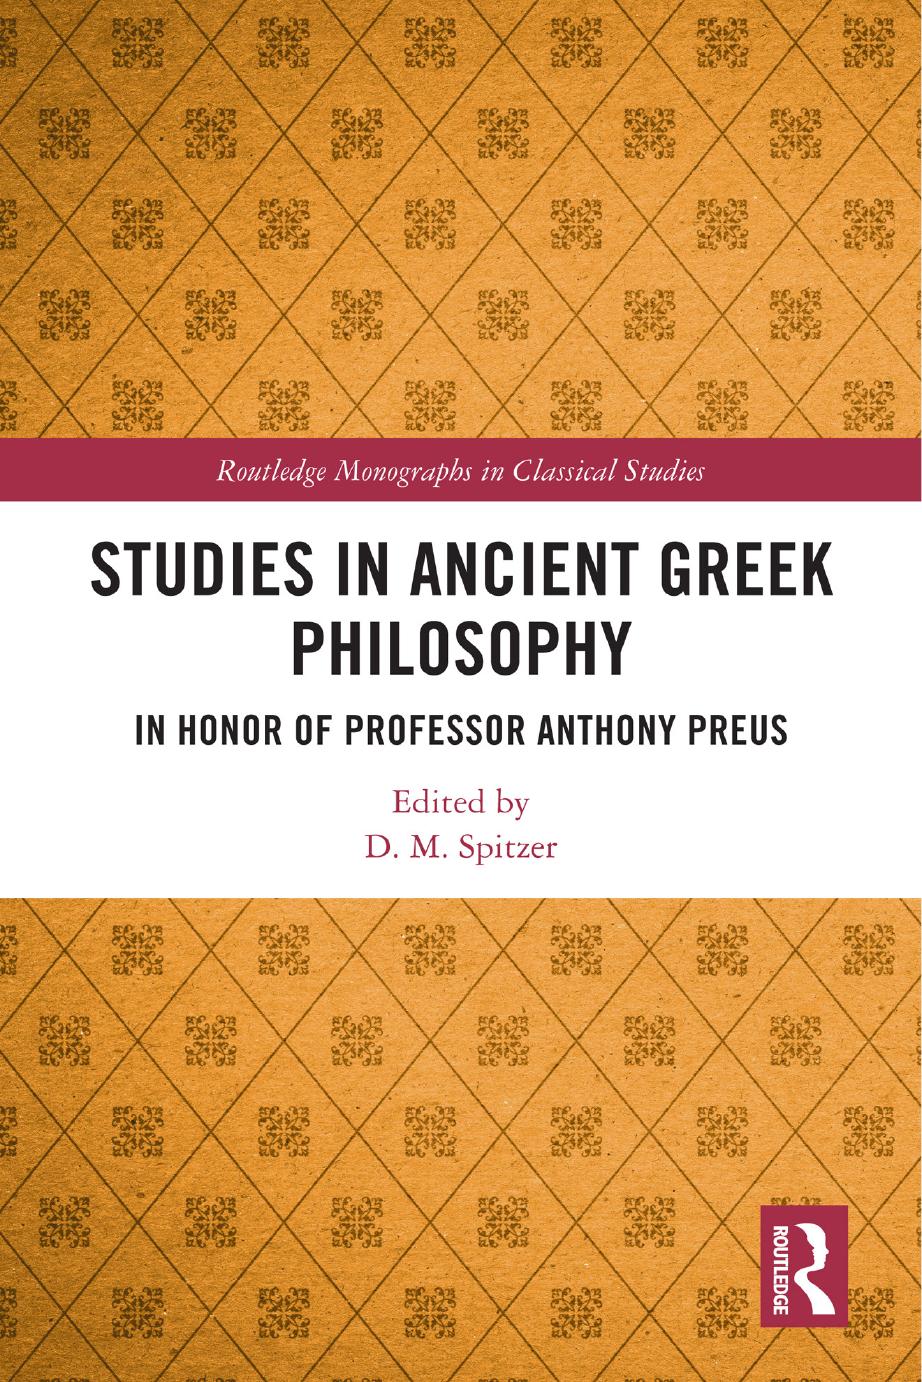 Studies in Ancient Greek Philosophy: In Honor of Professor Anthony Preus by D. M. Spitzer